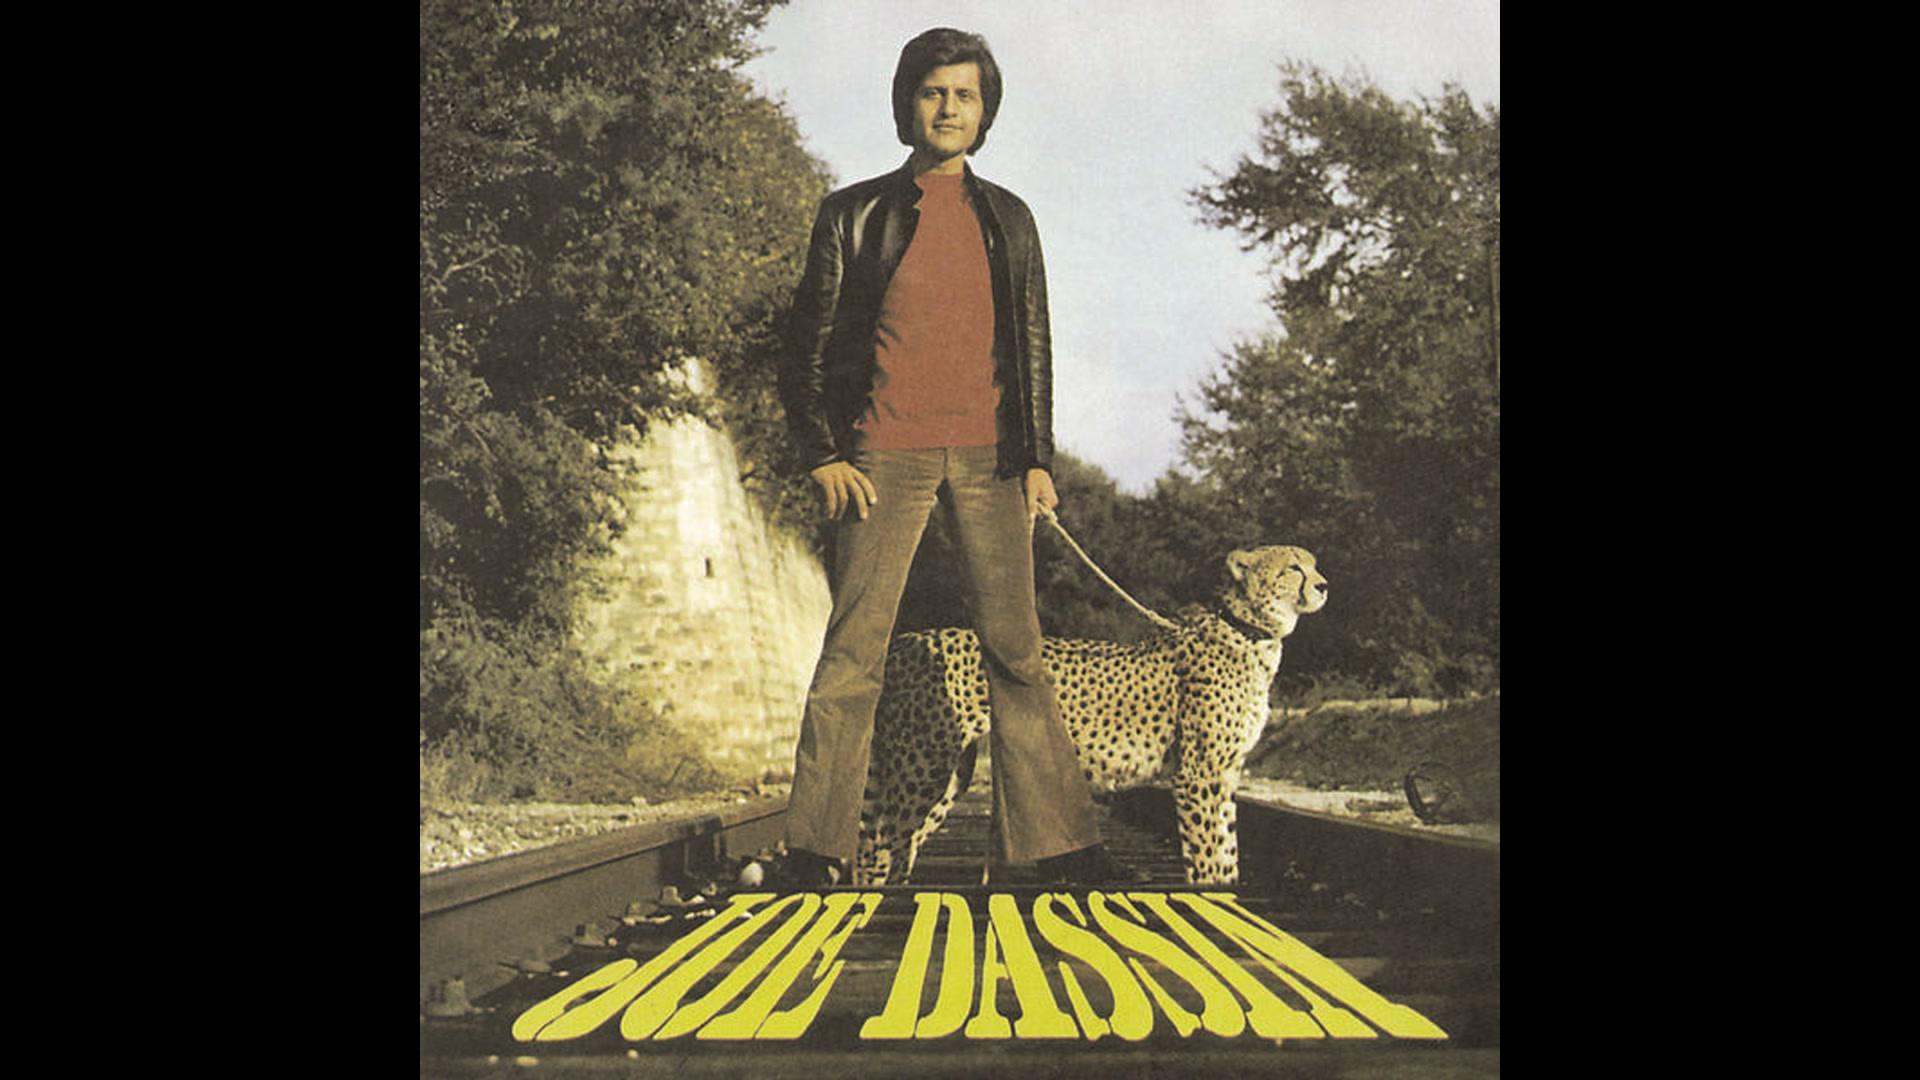 Joe Dassin - L'Amérique (Yellow River) (Audio)